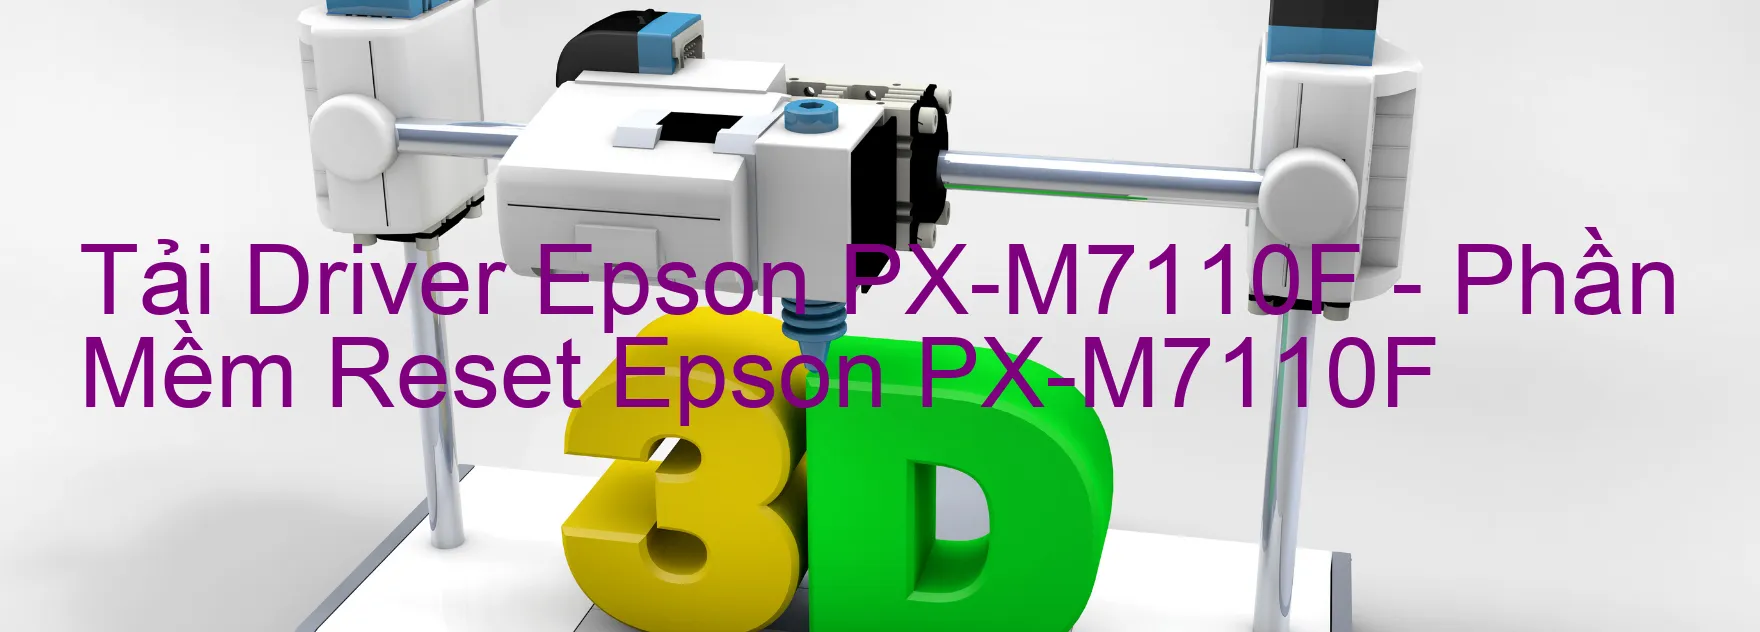 Driver Epson PX-M7110F, Phần Mềm Reset Epson PX-M7110F